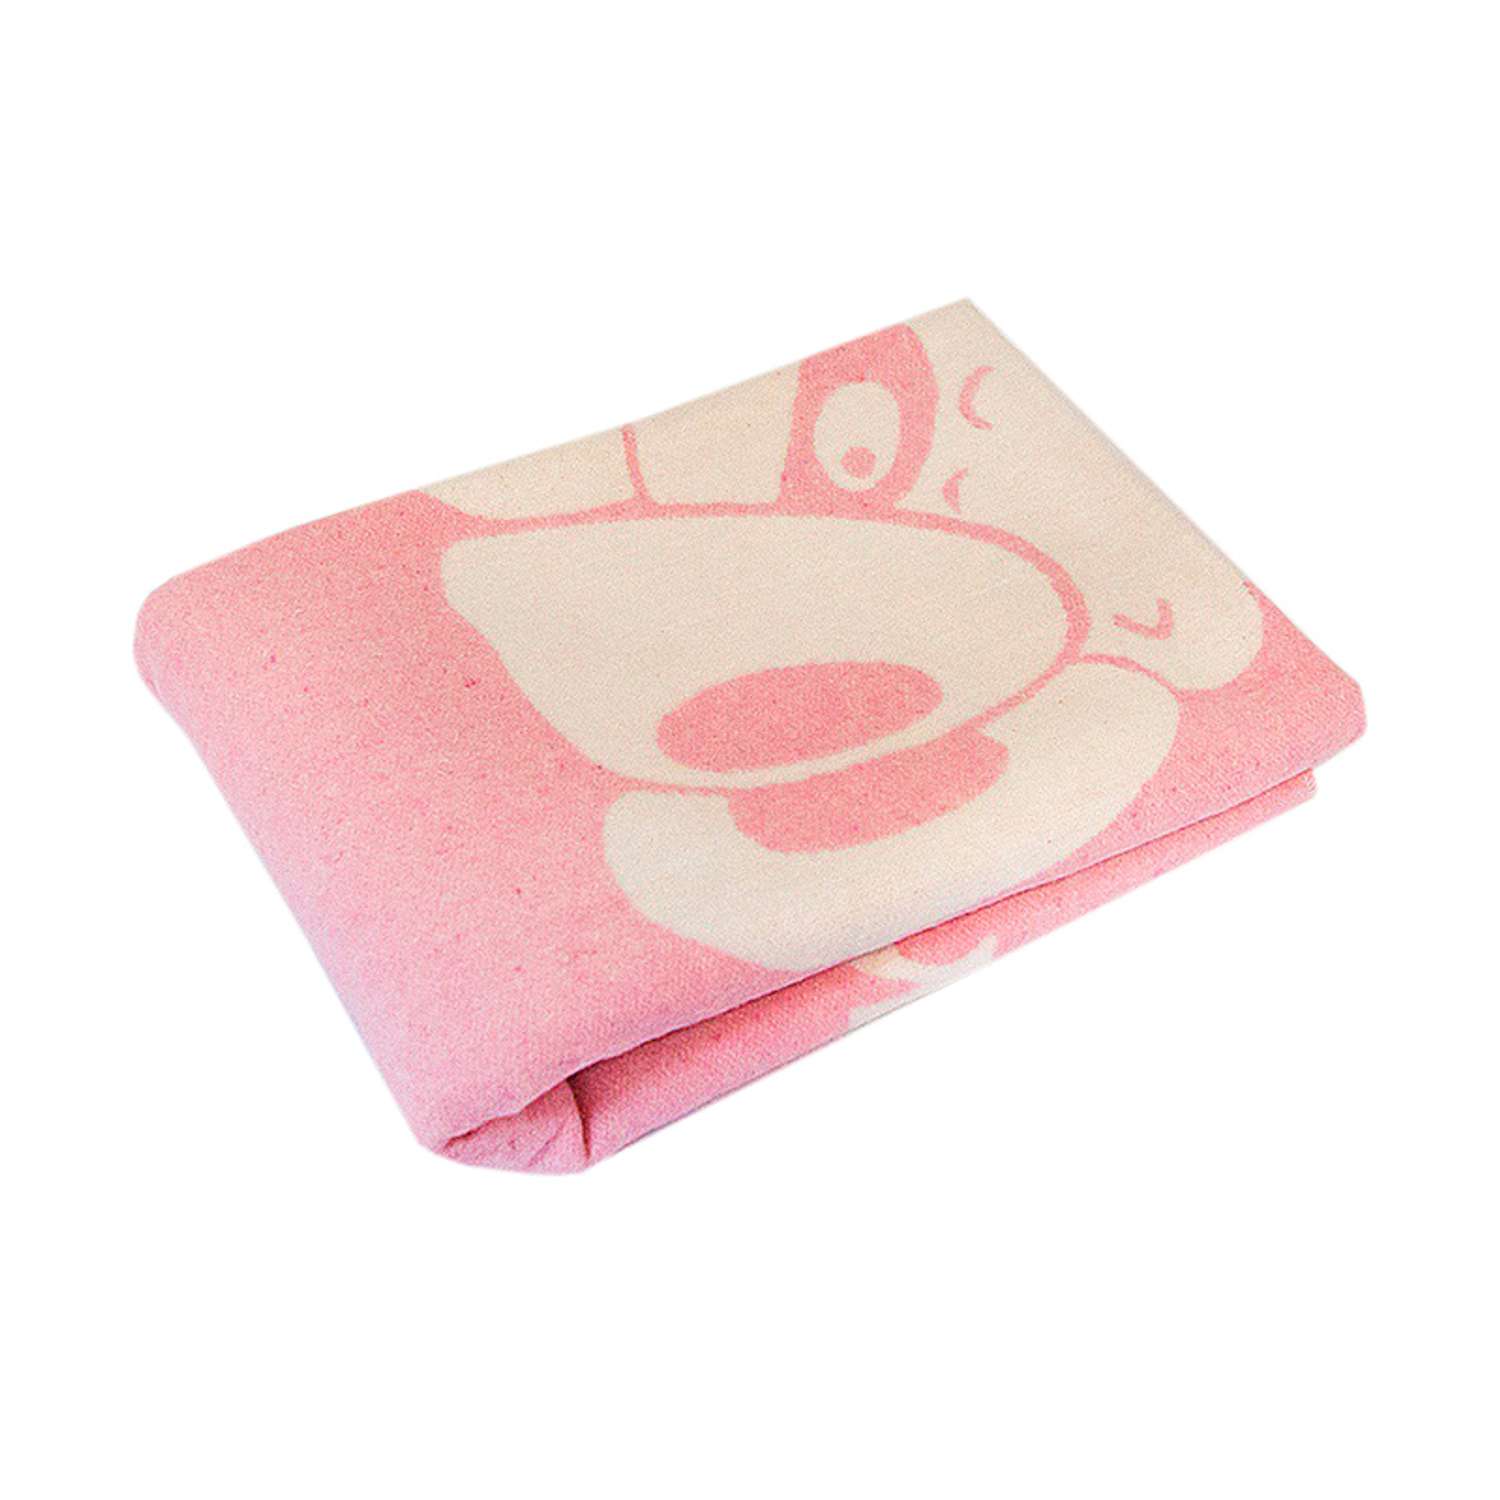 Одеяло байковое Споки Ноки жаккард 100х140 розовый - фото 3